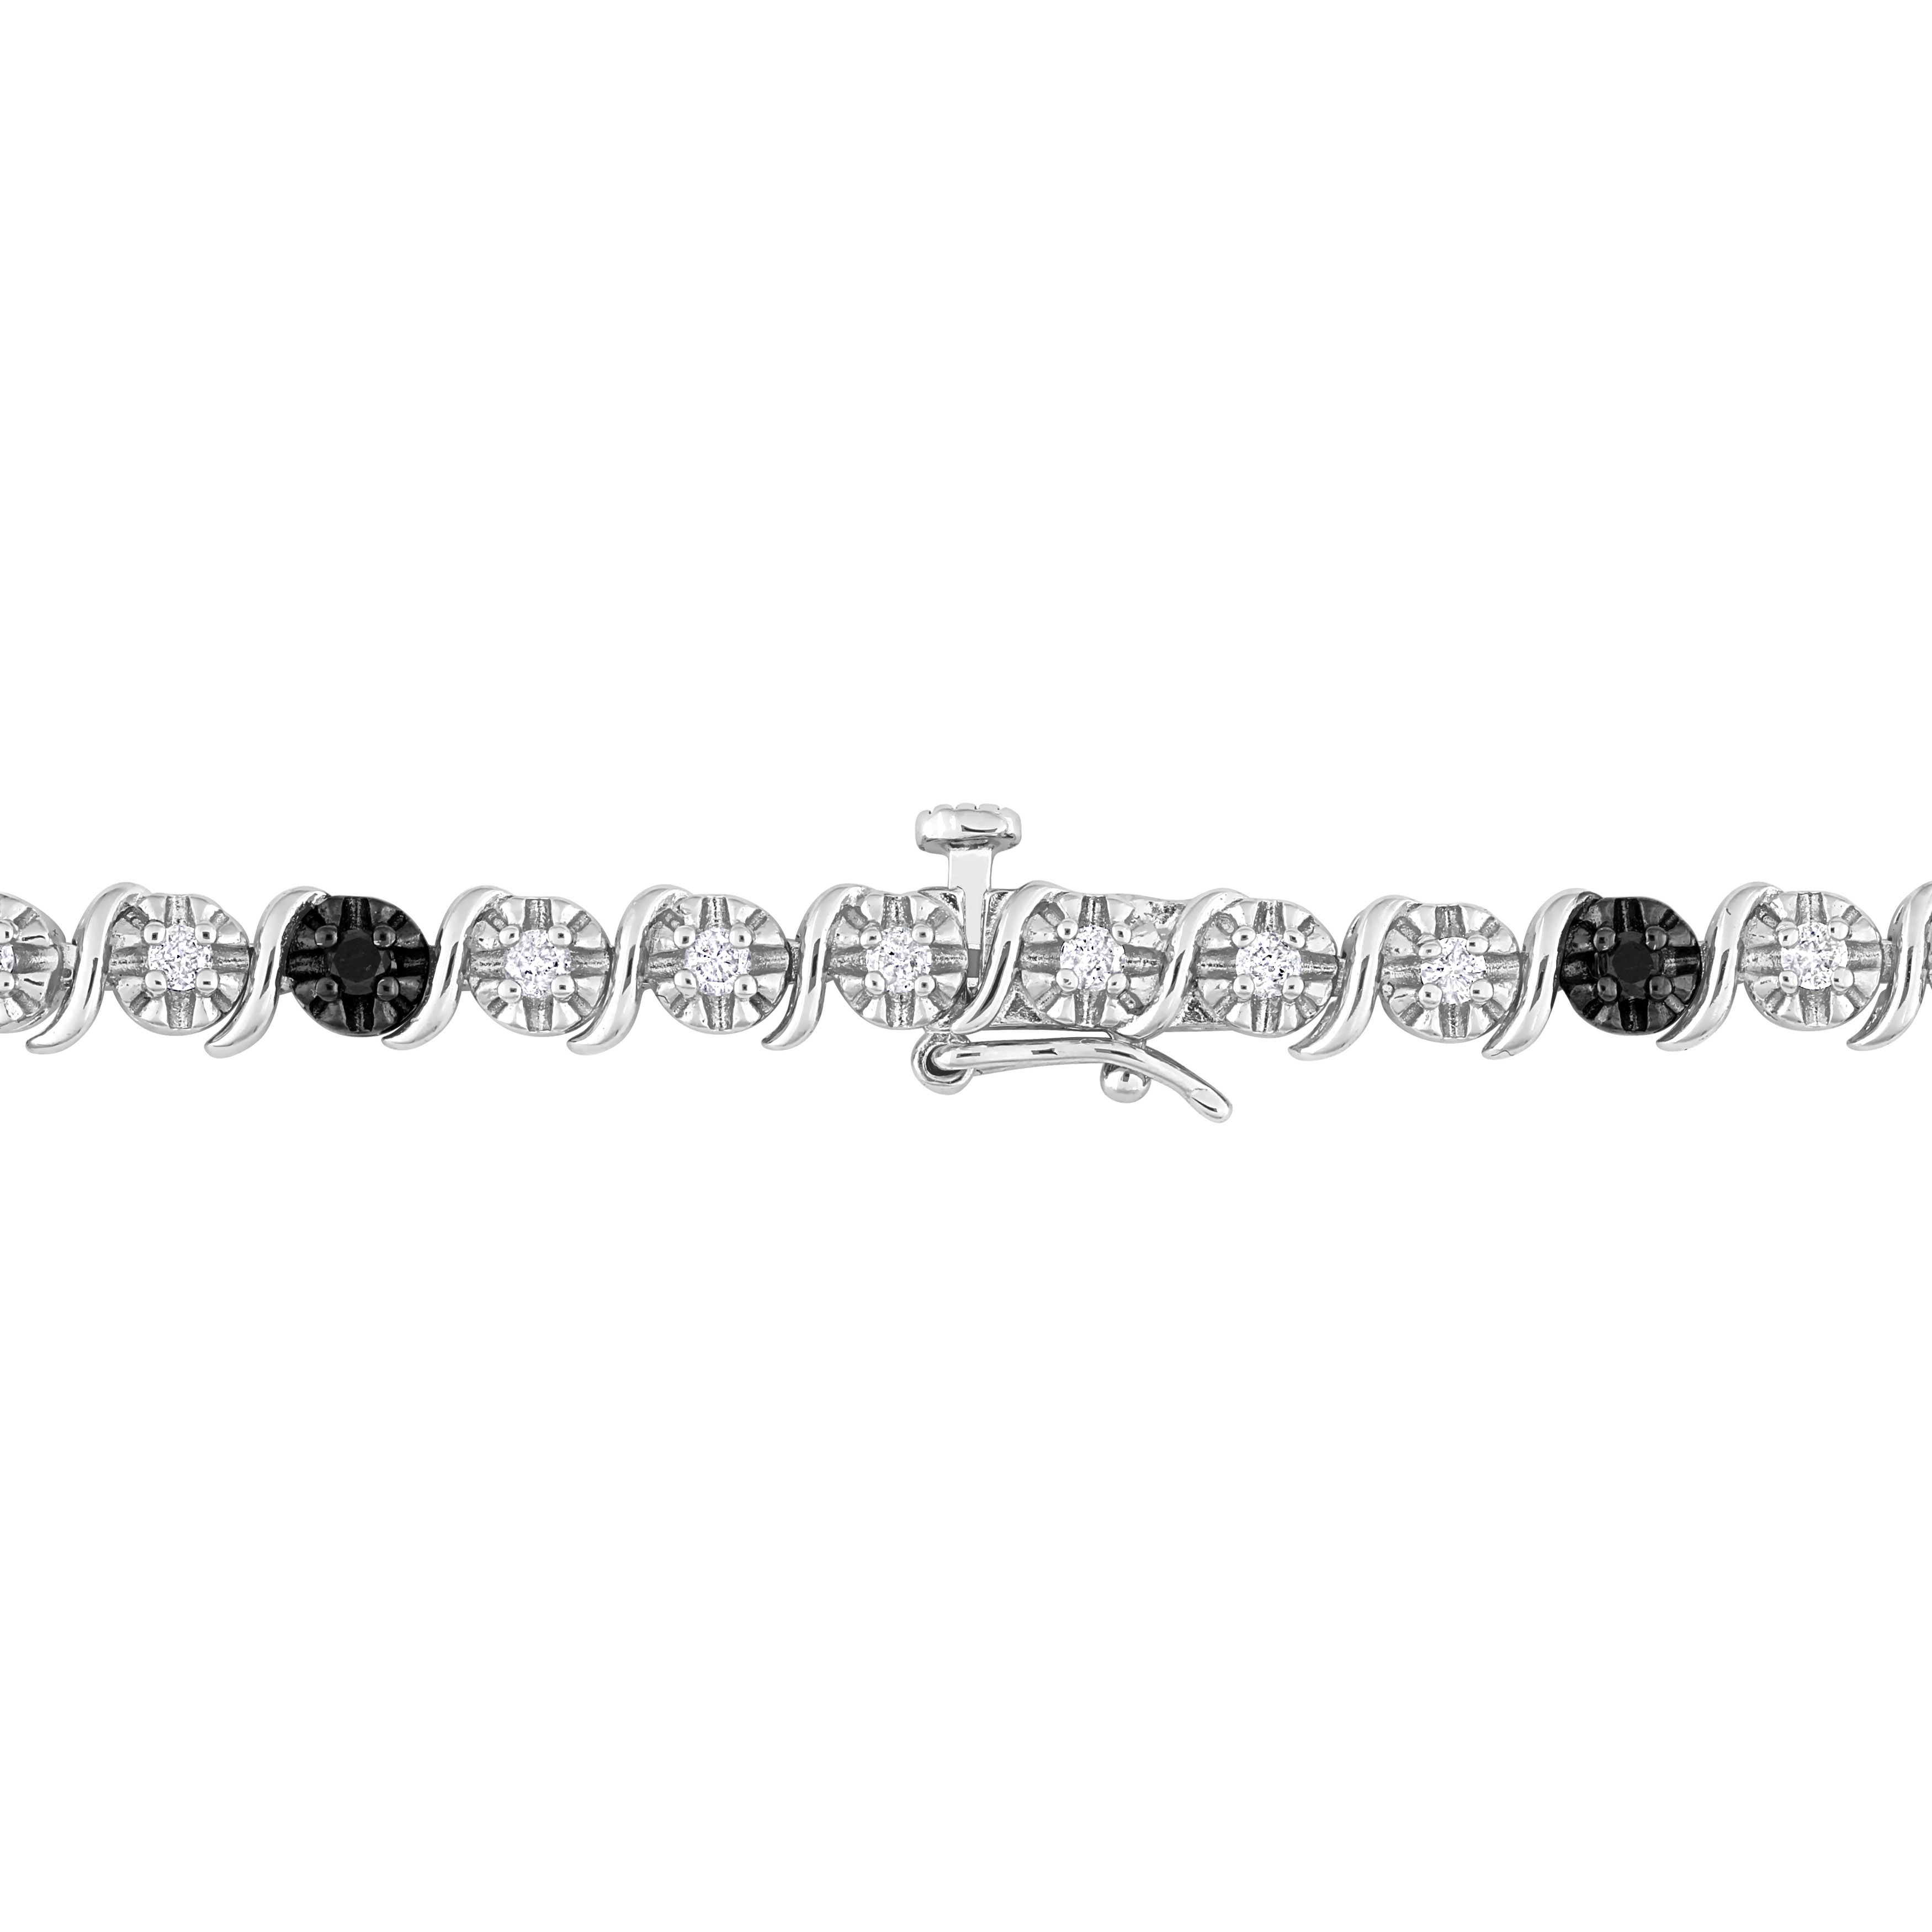 1 CT TW Black & White Diamond Tennis Bracelet in Sterling Silver - 7.5 in.